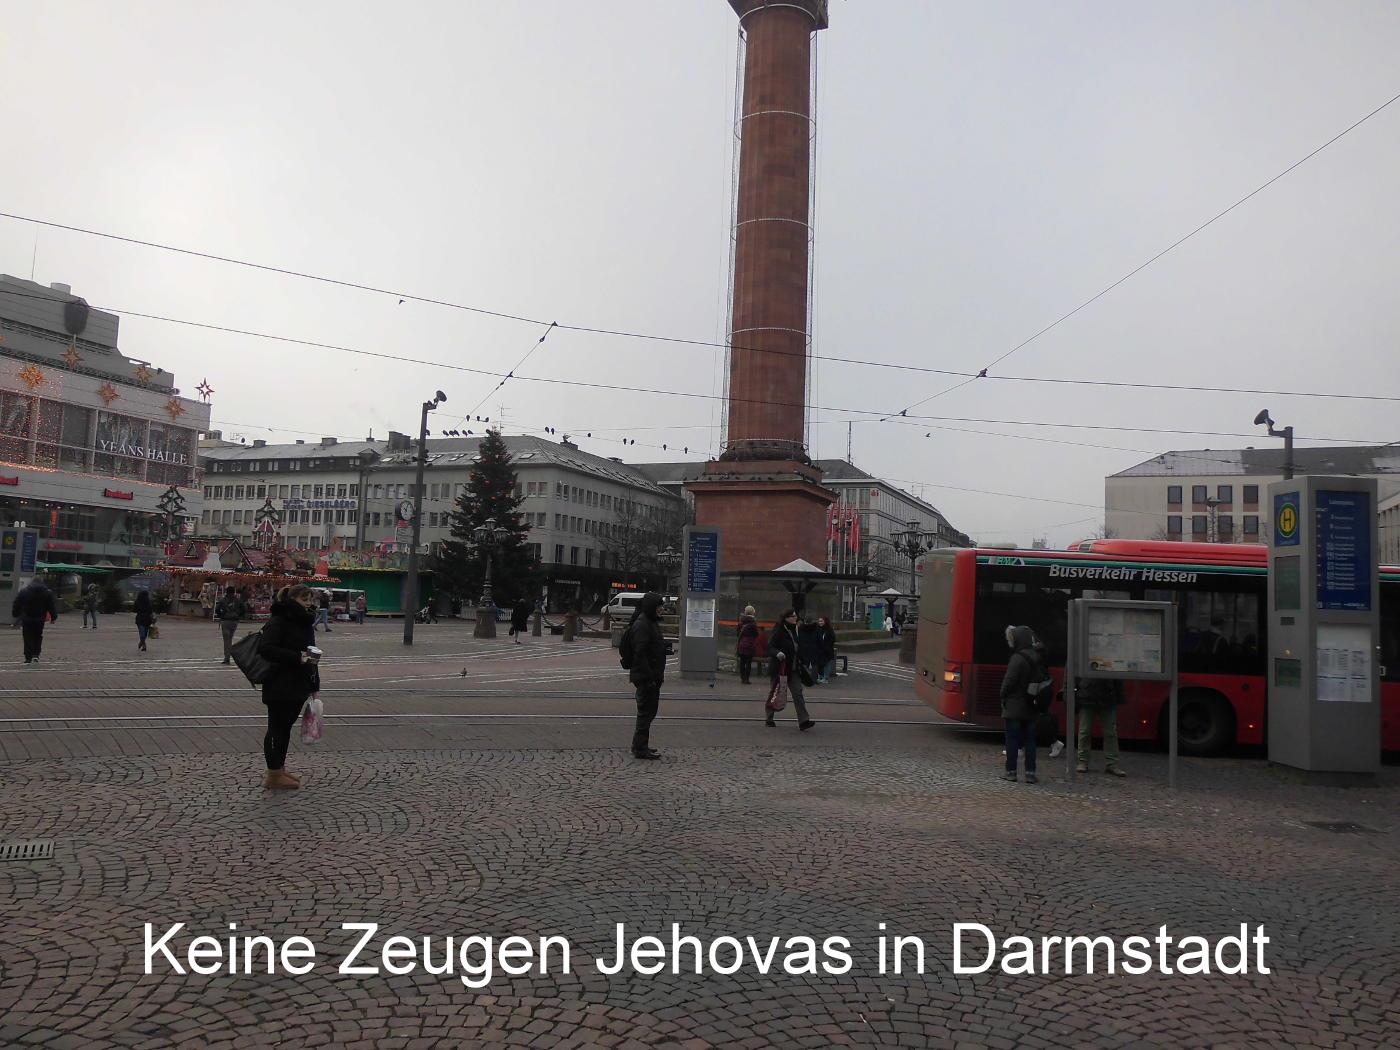 Darmstadt: No Cannibalism – Jehovah's Witnesses Deny, Deny, Deny